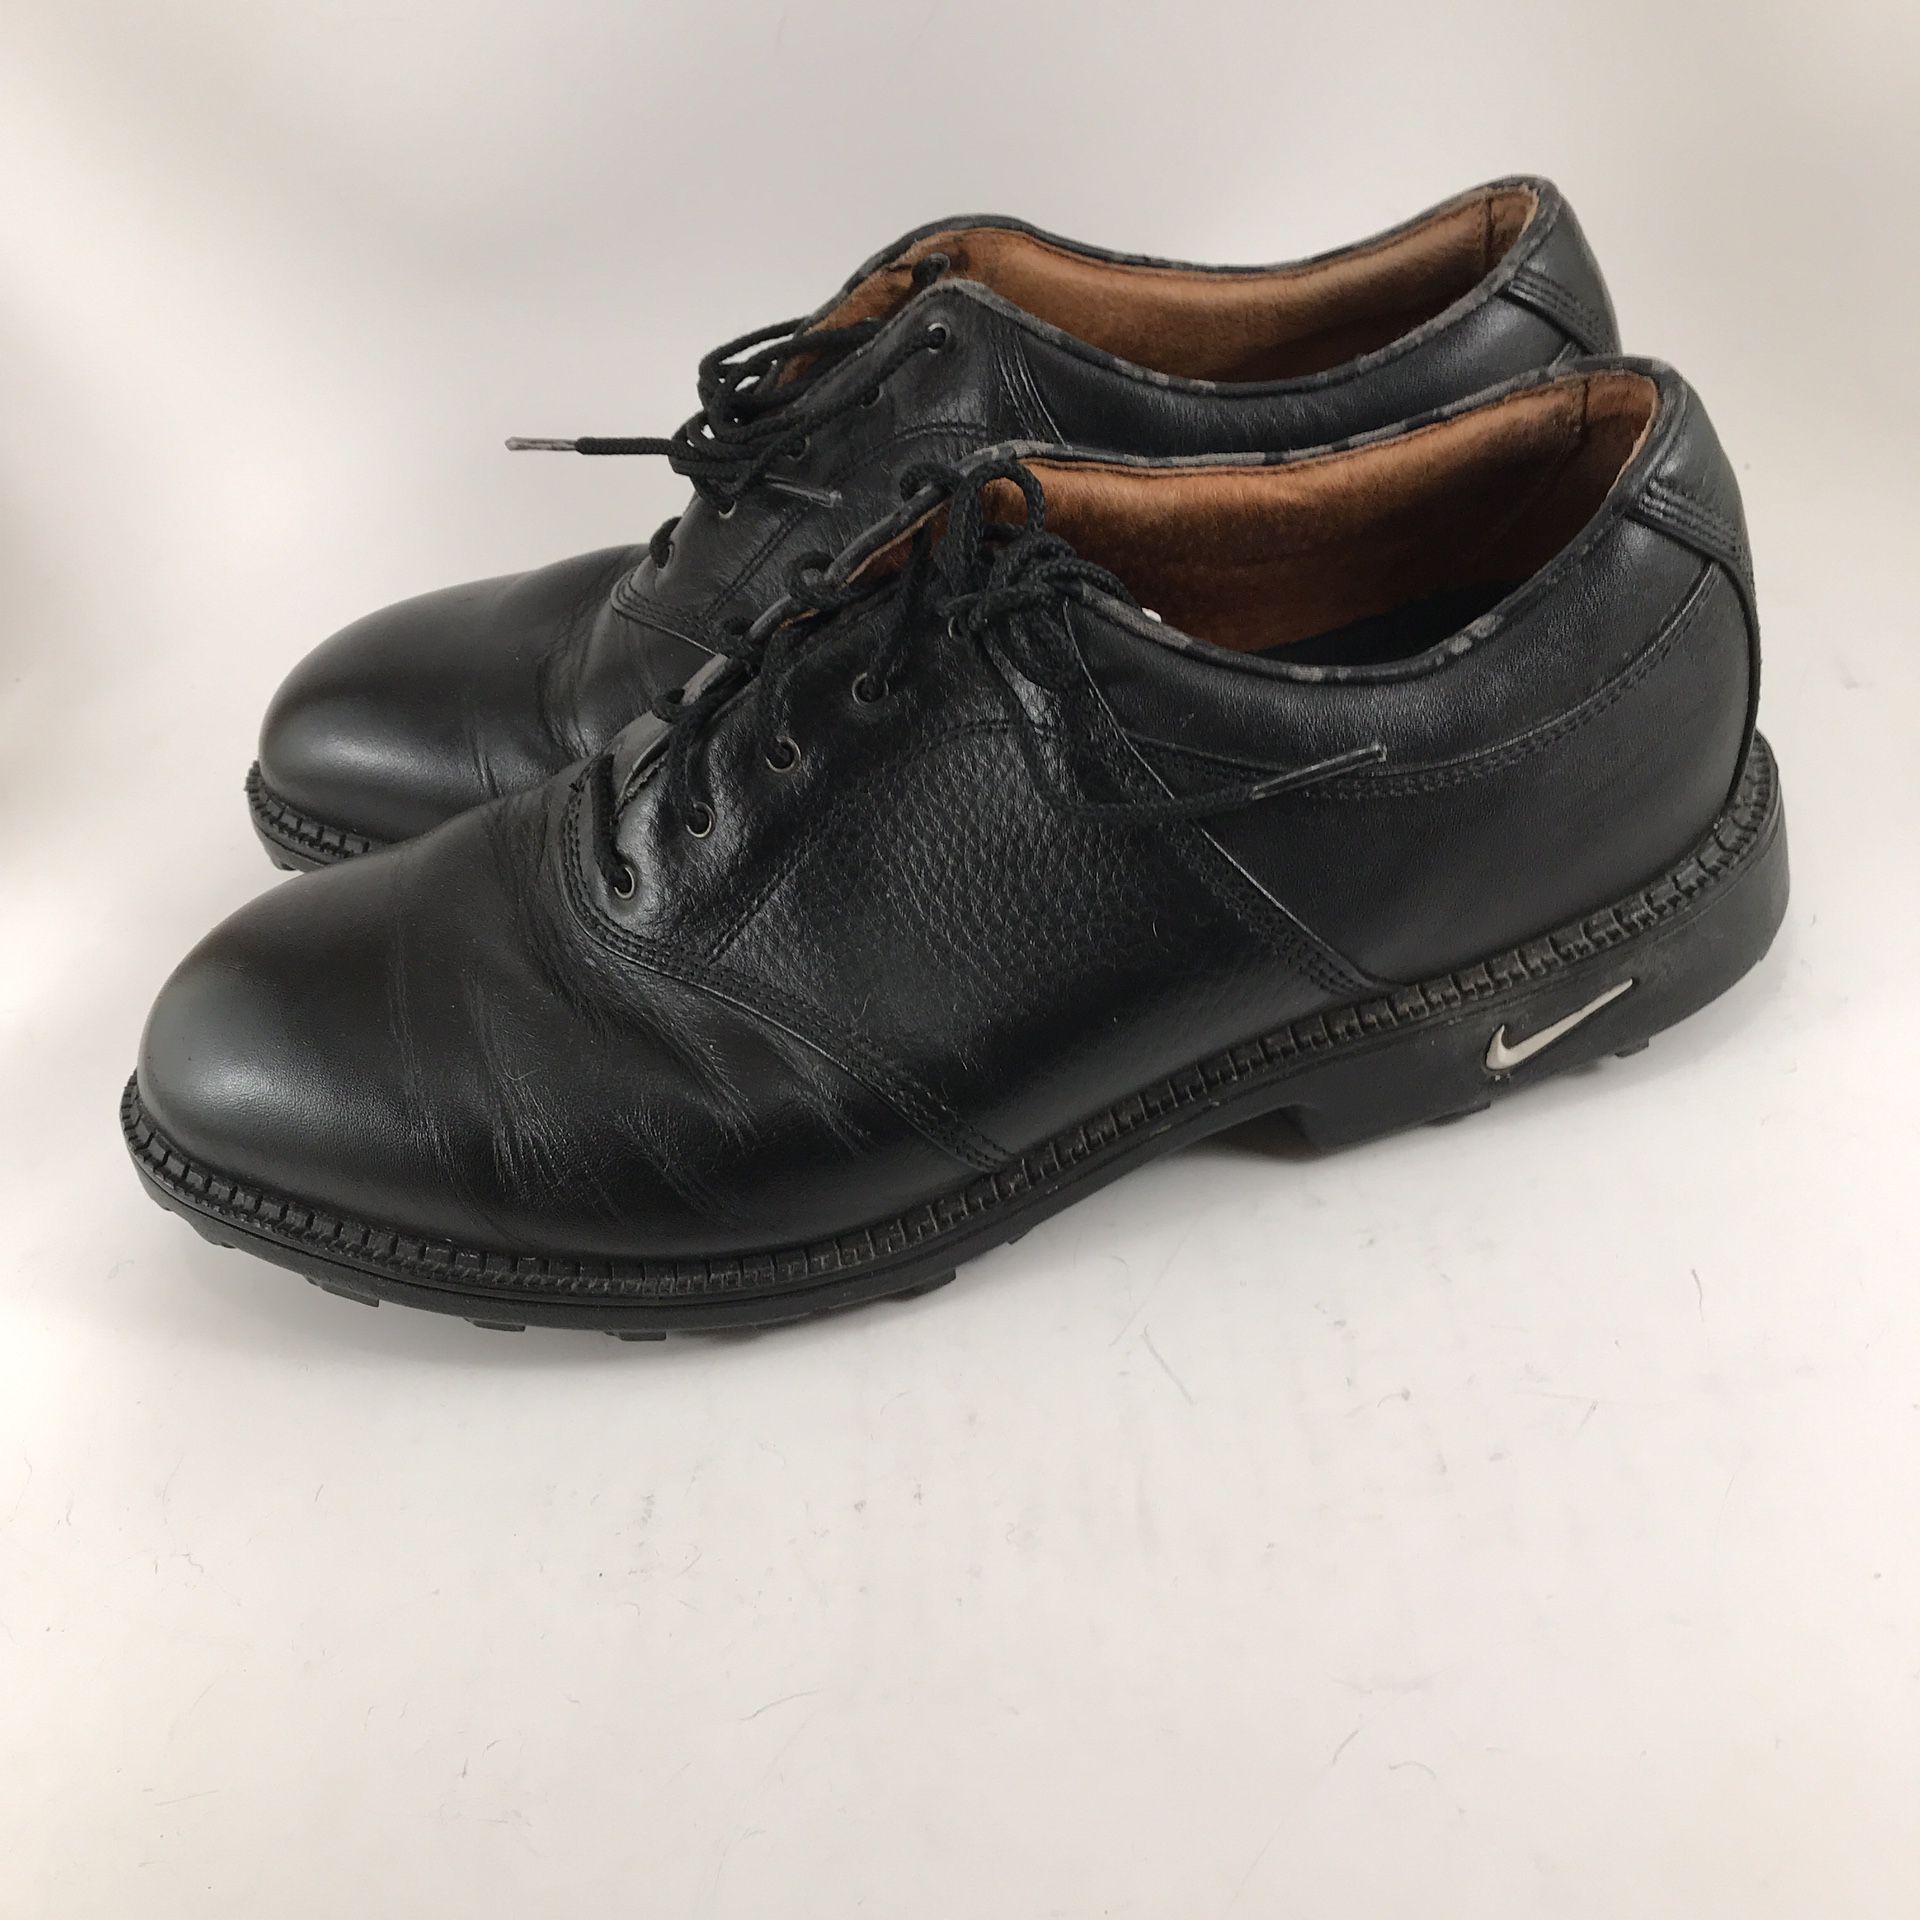 Nike 183232-101 Kempshall Last Golf Shoes Men's Size 8